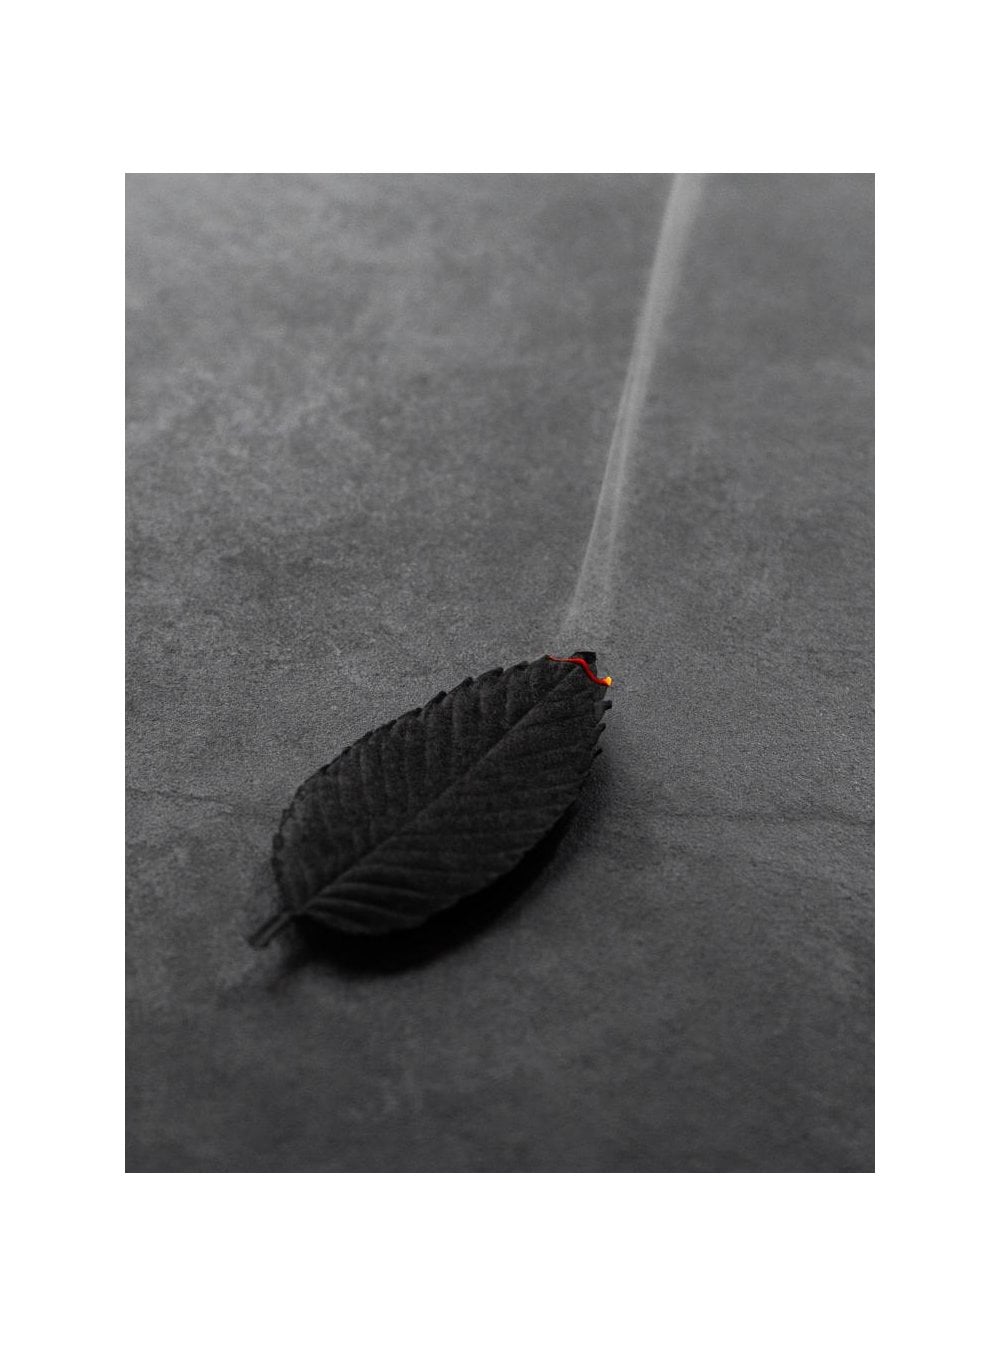 HA KO Paper Incense - Black For Relaxation - Set of 6